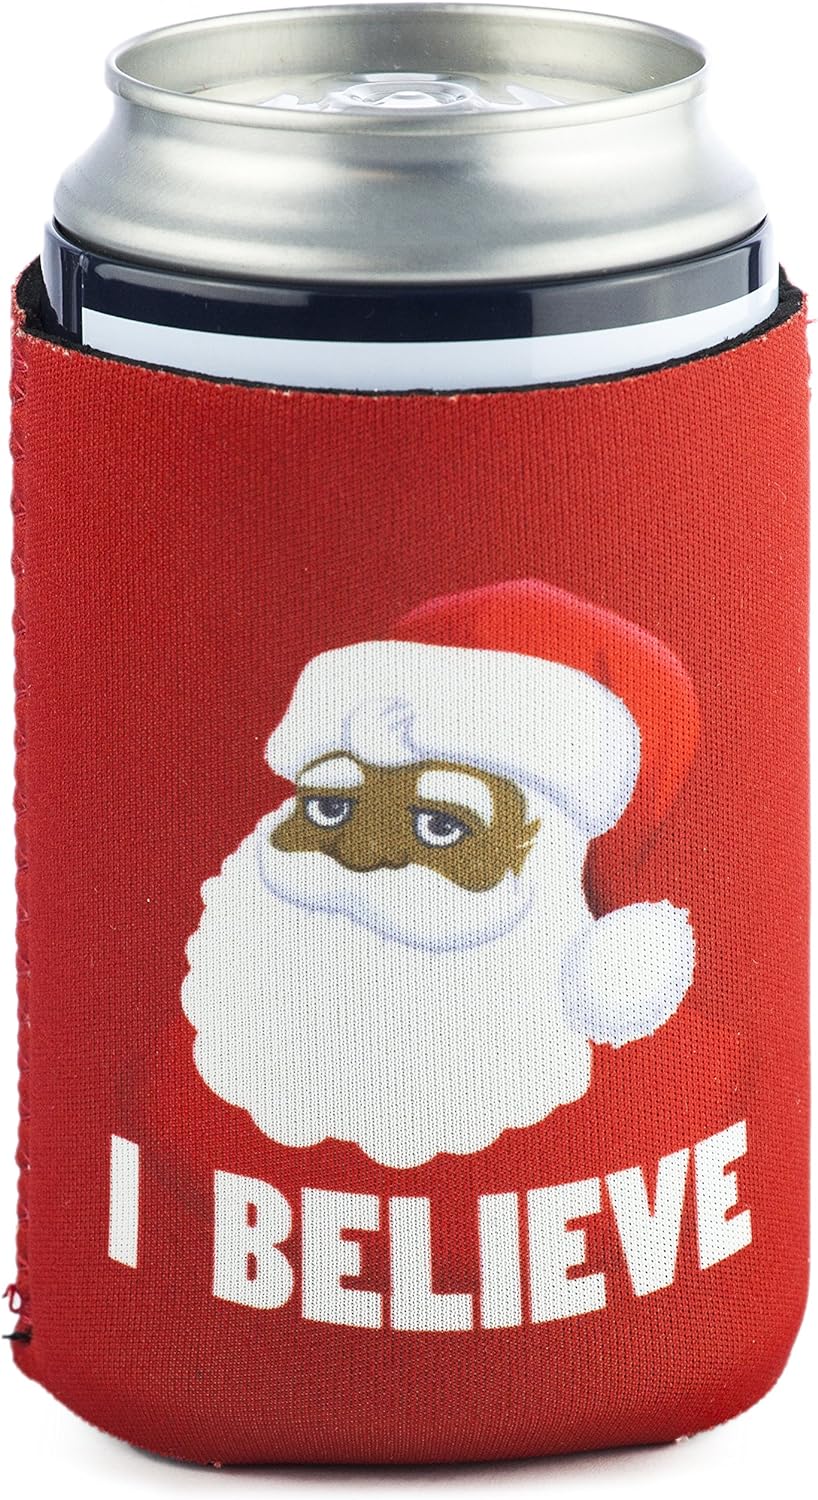 I Believe Santa Collapsible Neoprene Can Coolie - Ho Ho Ho on Bottom - Christmas Drink Cooler